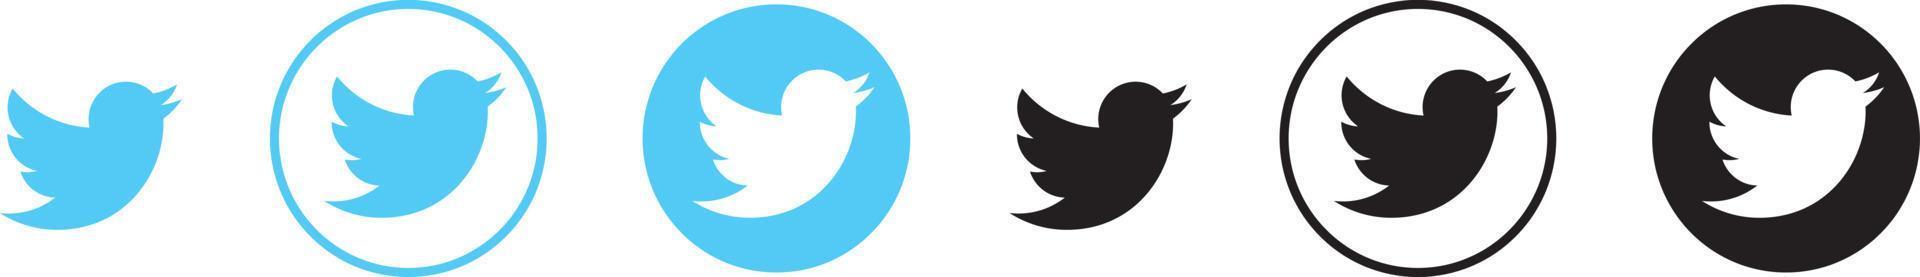 Twitter-logo rond pictogram in lichtblauwe kleur vector